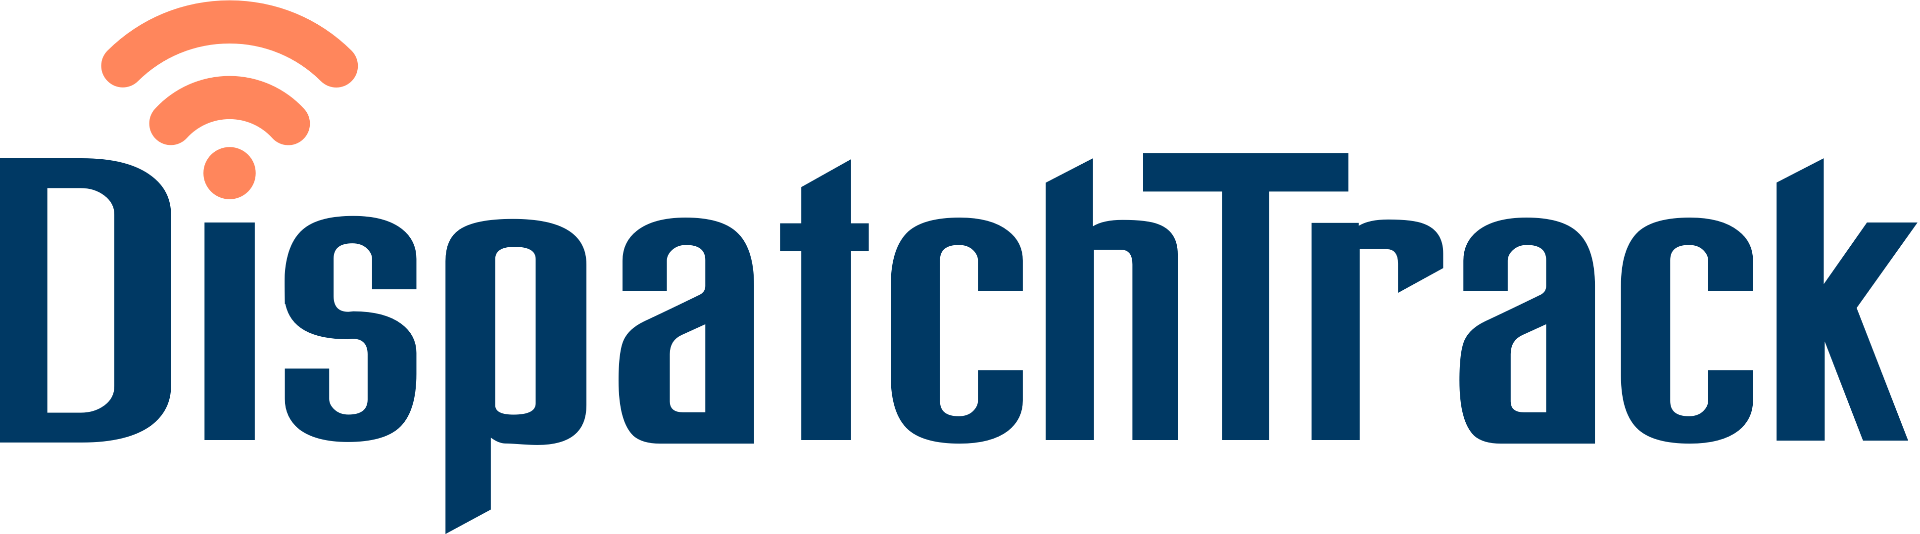 STORIS Partner DispatchTrack Logo